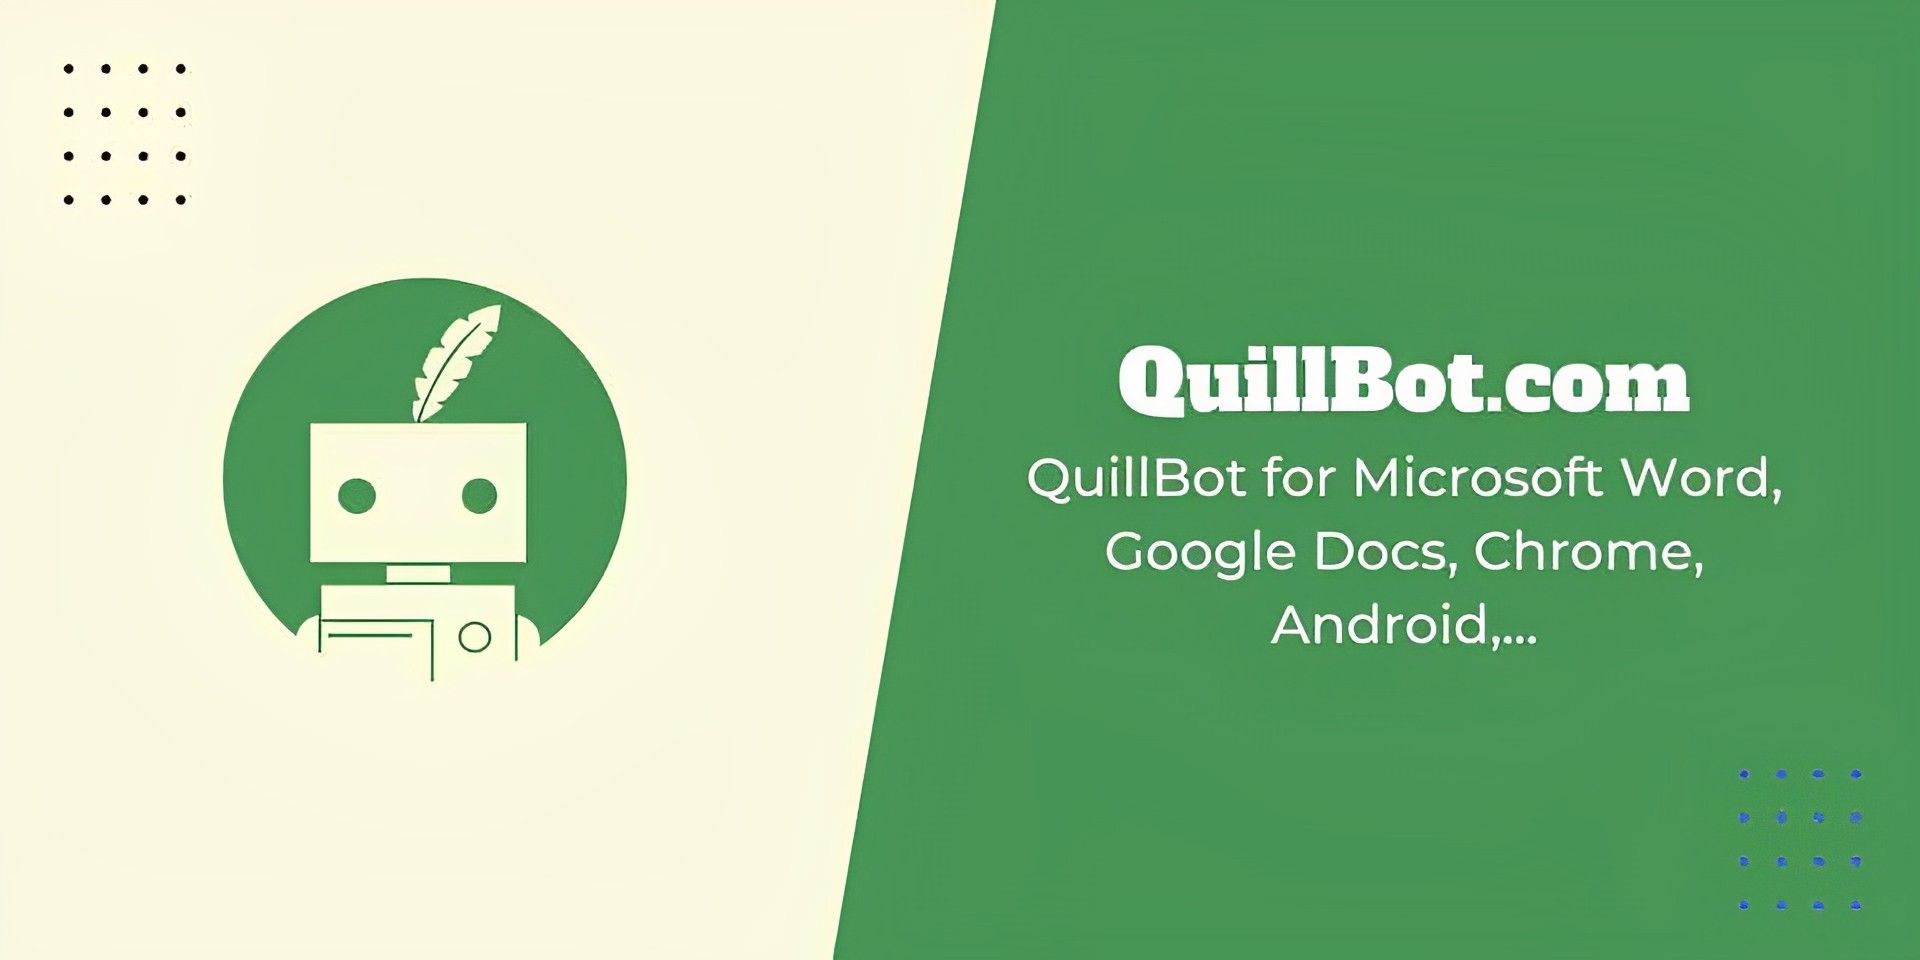 Quillbot not working